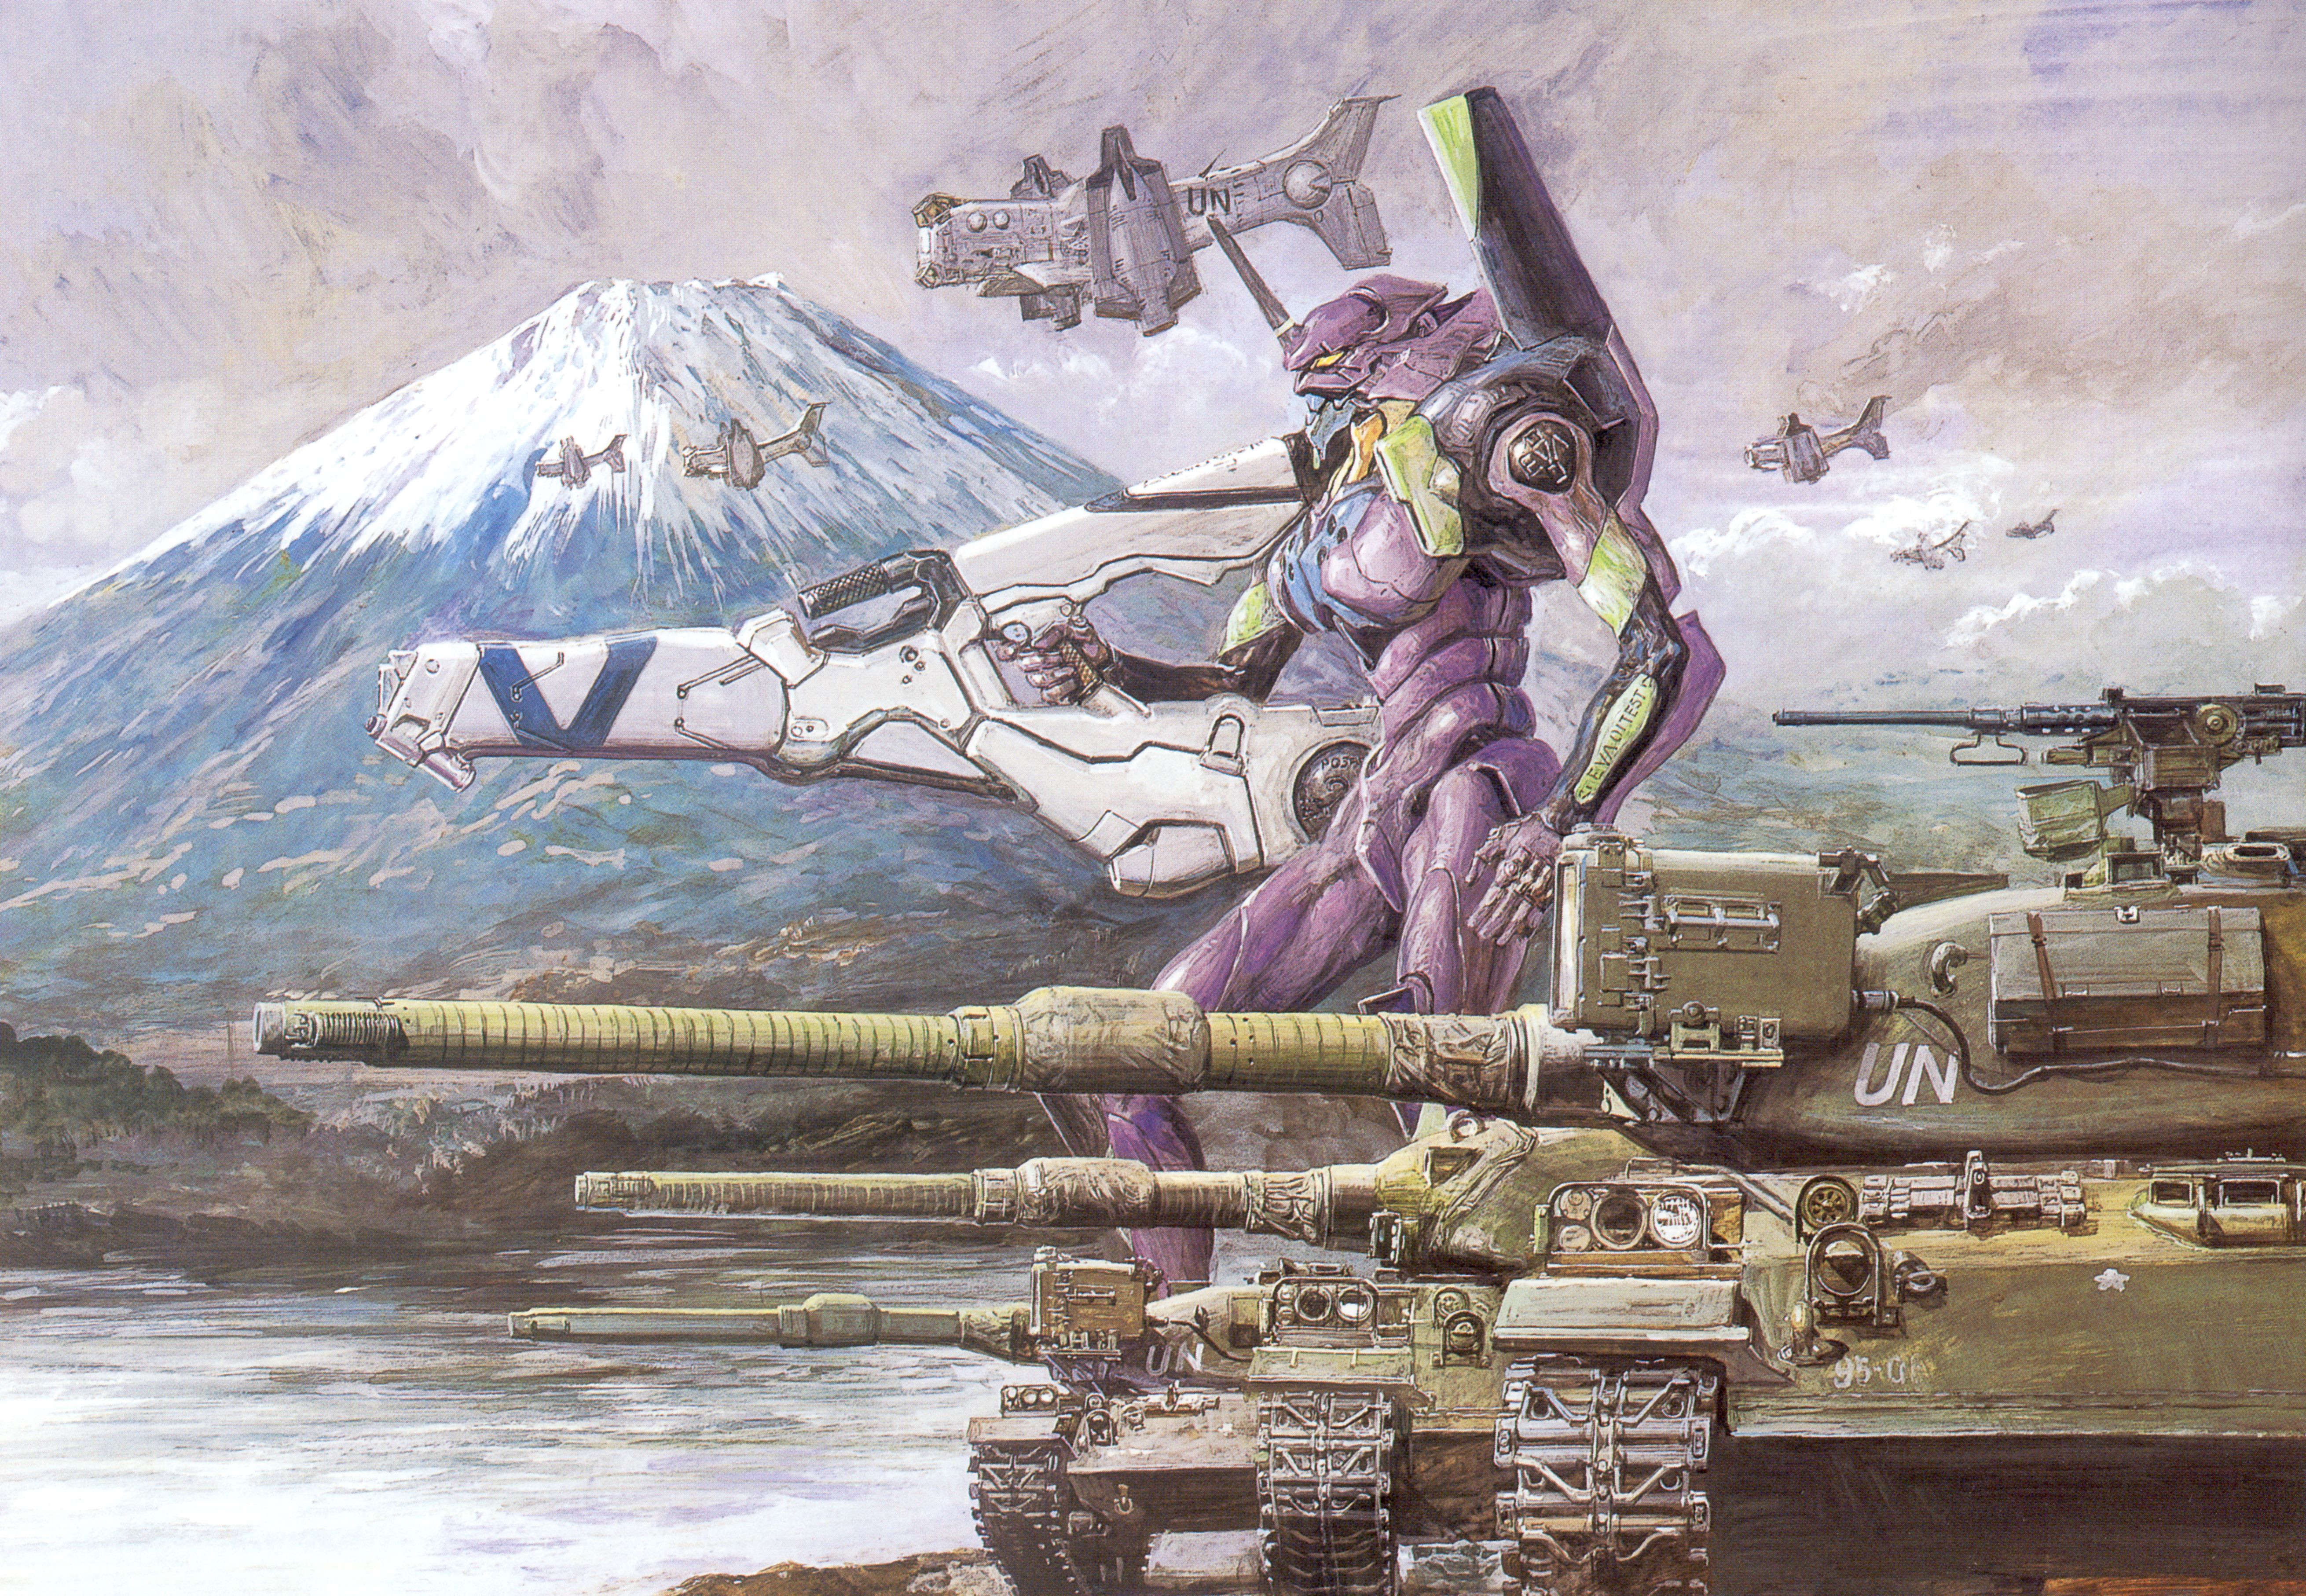 Anime 5241x3628 Neon Genesis Evangelion weapon EVA Unit 01 Mount Fuji anime mechs water gun military vehicle tank military aiming sky